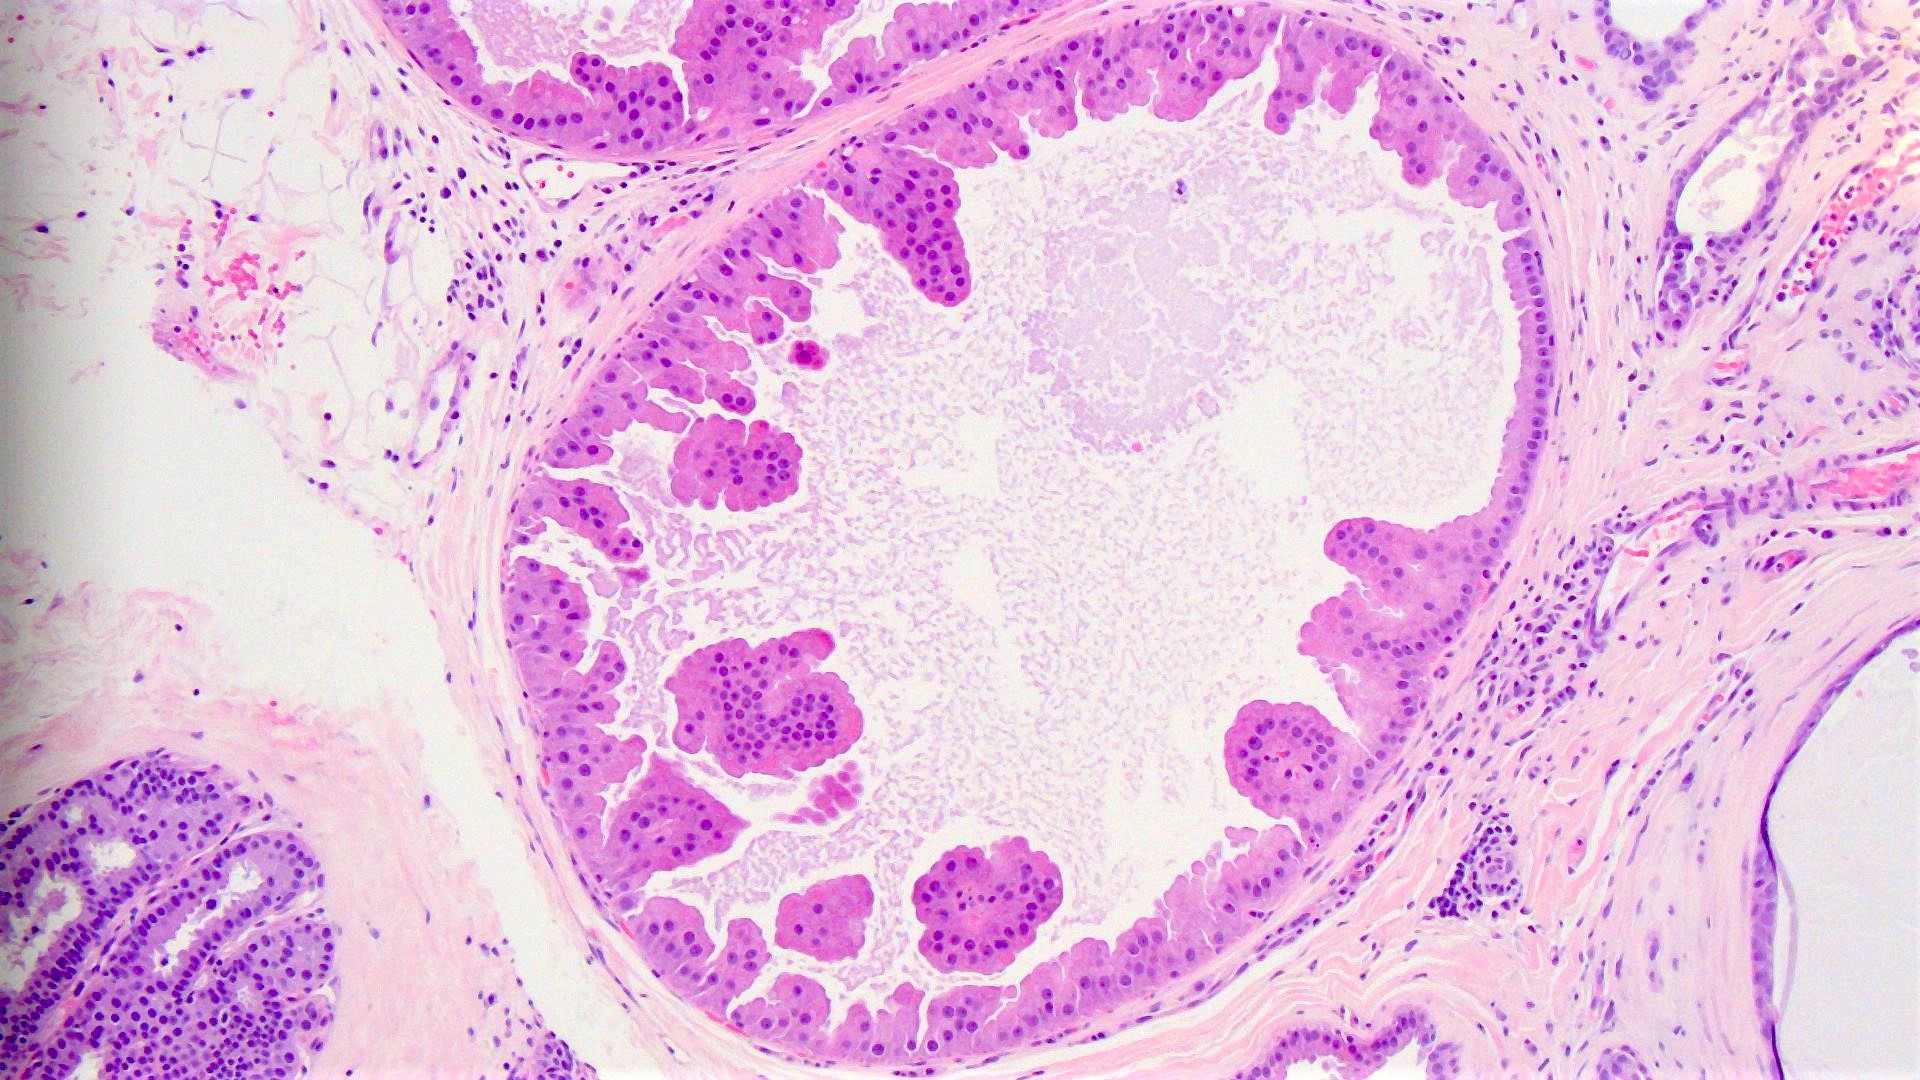 Intraductal papilloma with focal apocrine metaplasia